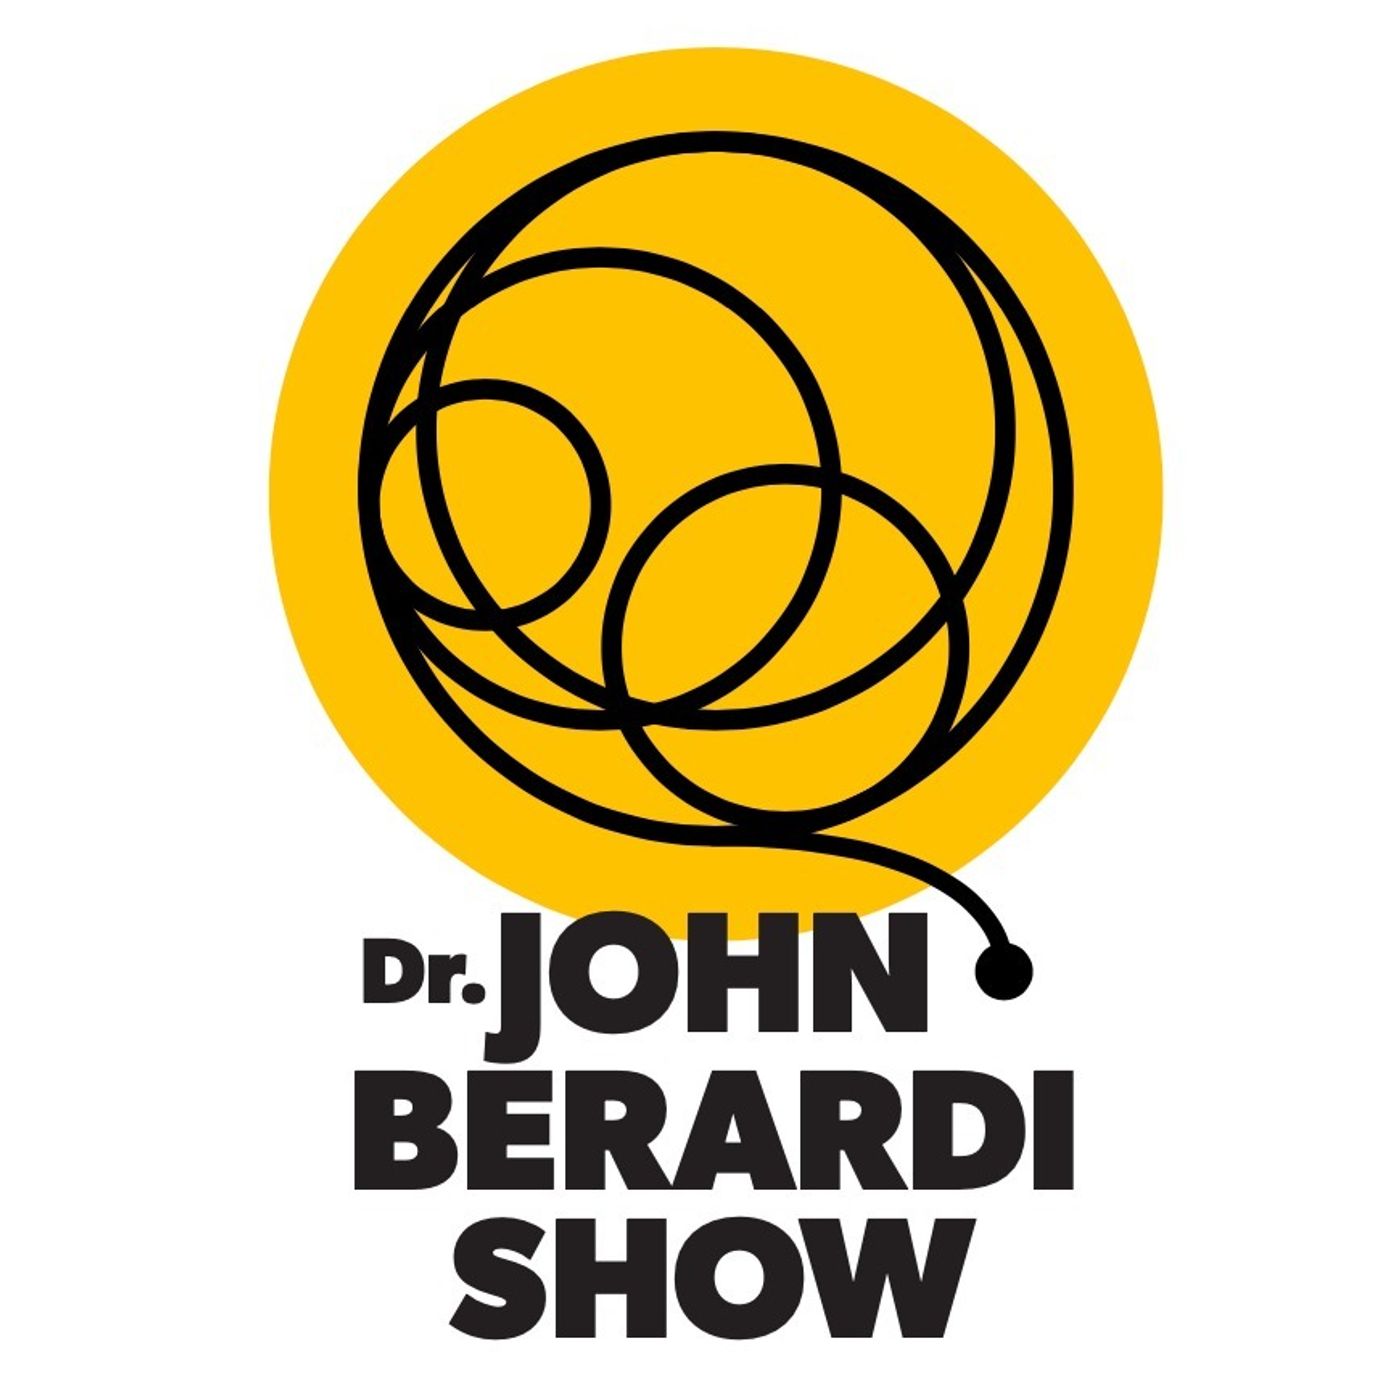 The Dr. John Berardi Show